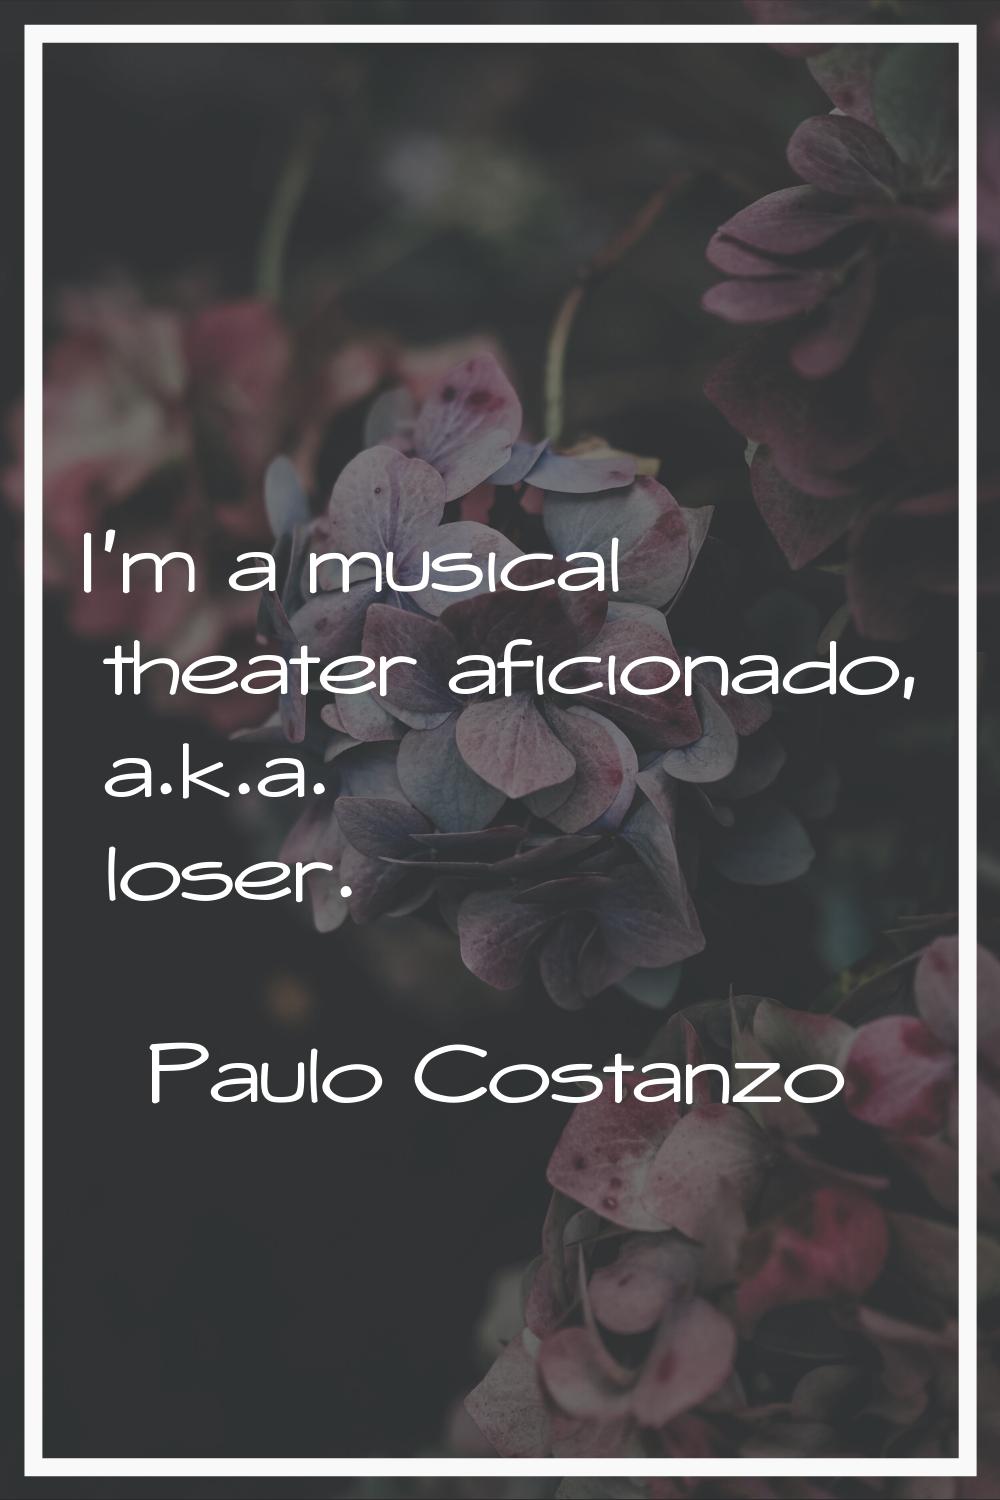 I'm a musical theater aficionado, a.k.a. loser.